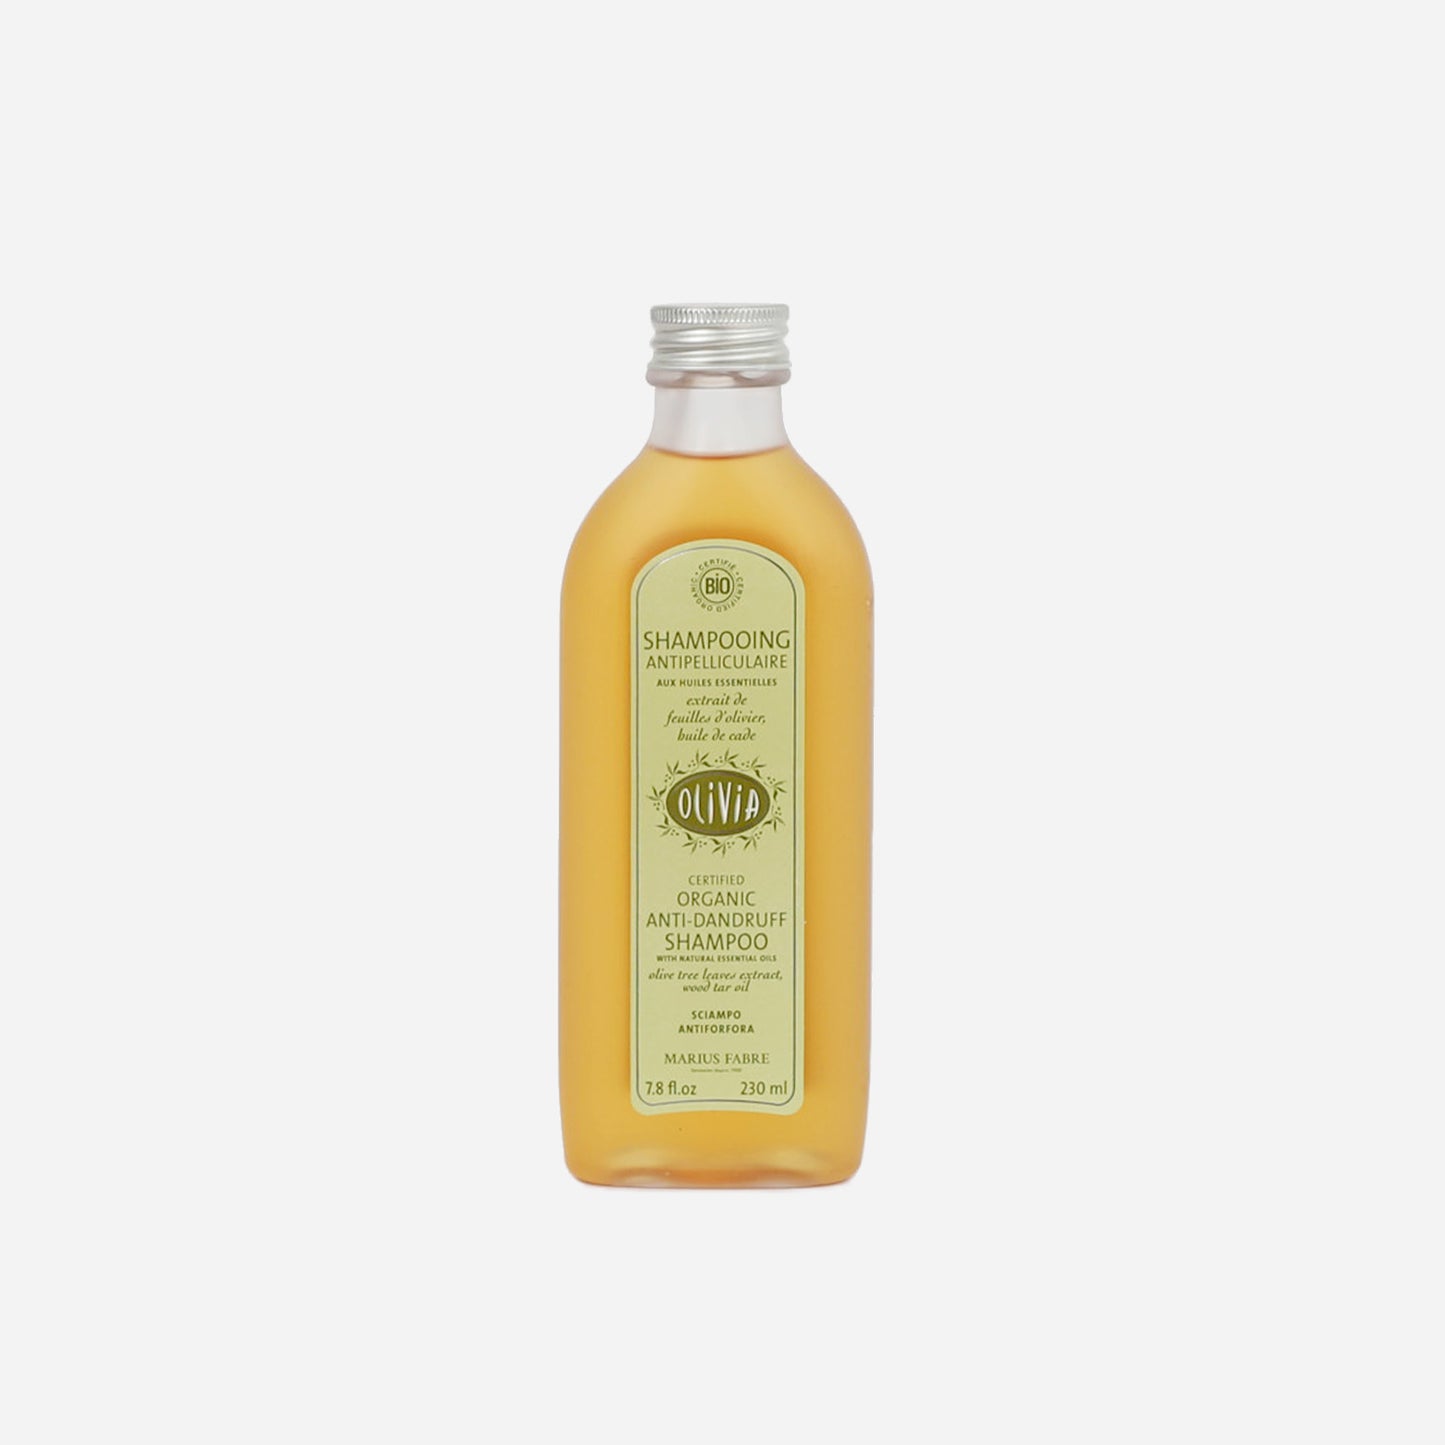 Organic Cade Oil Dandruff Shampoo, 230ml